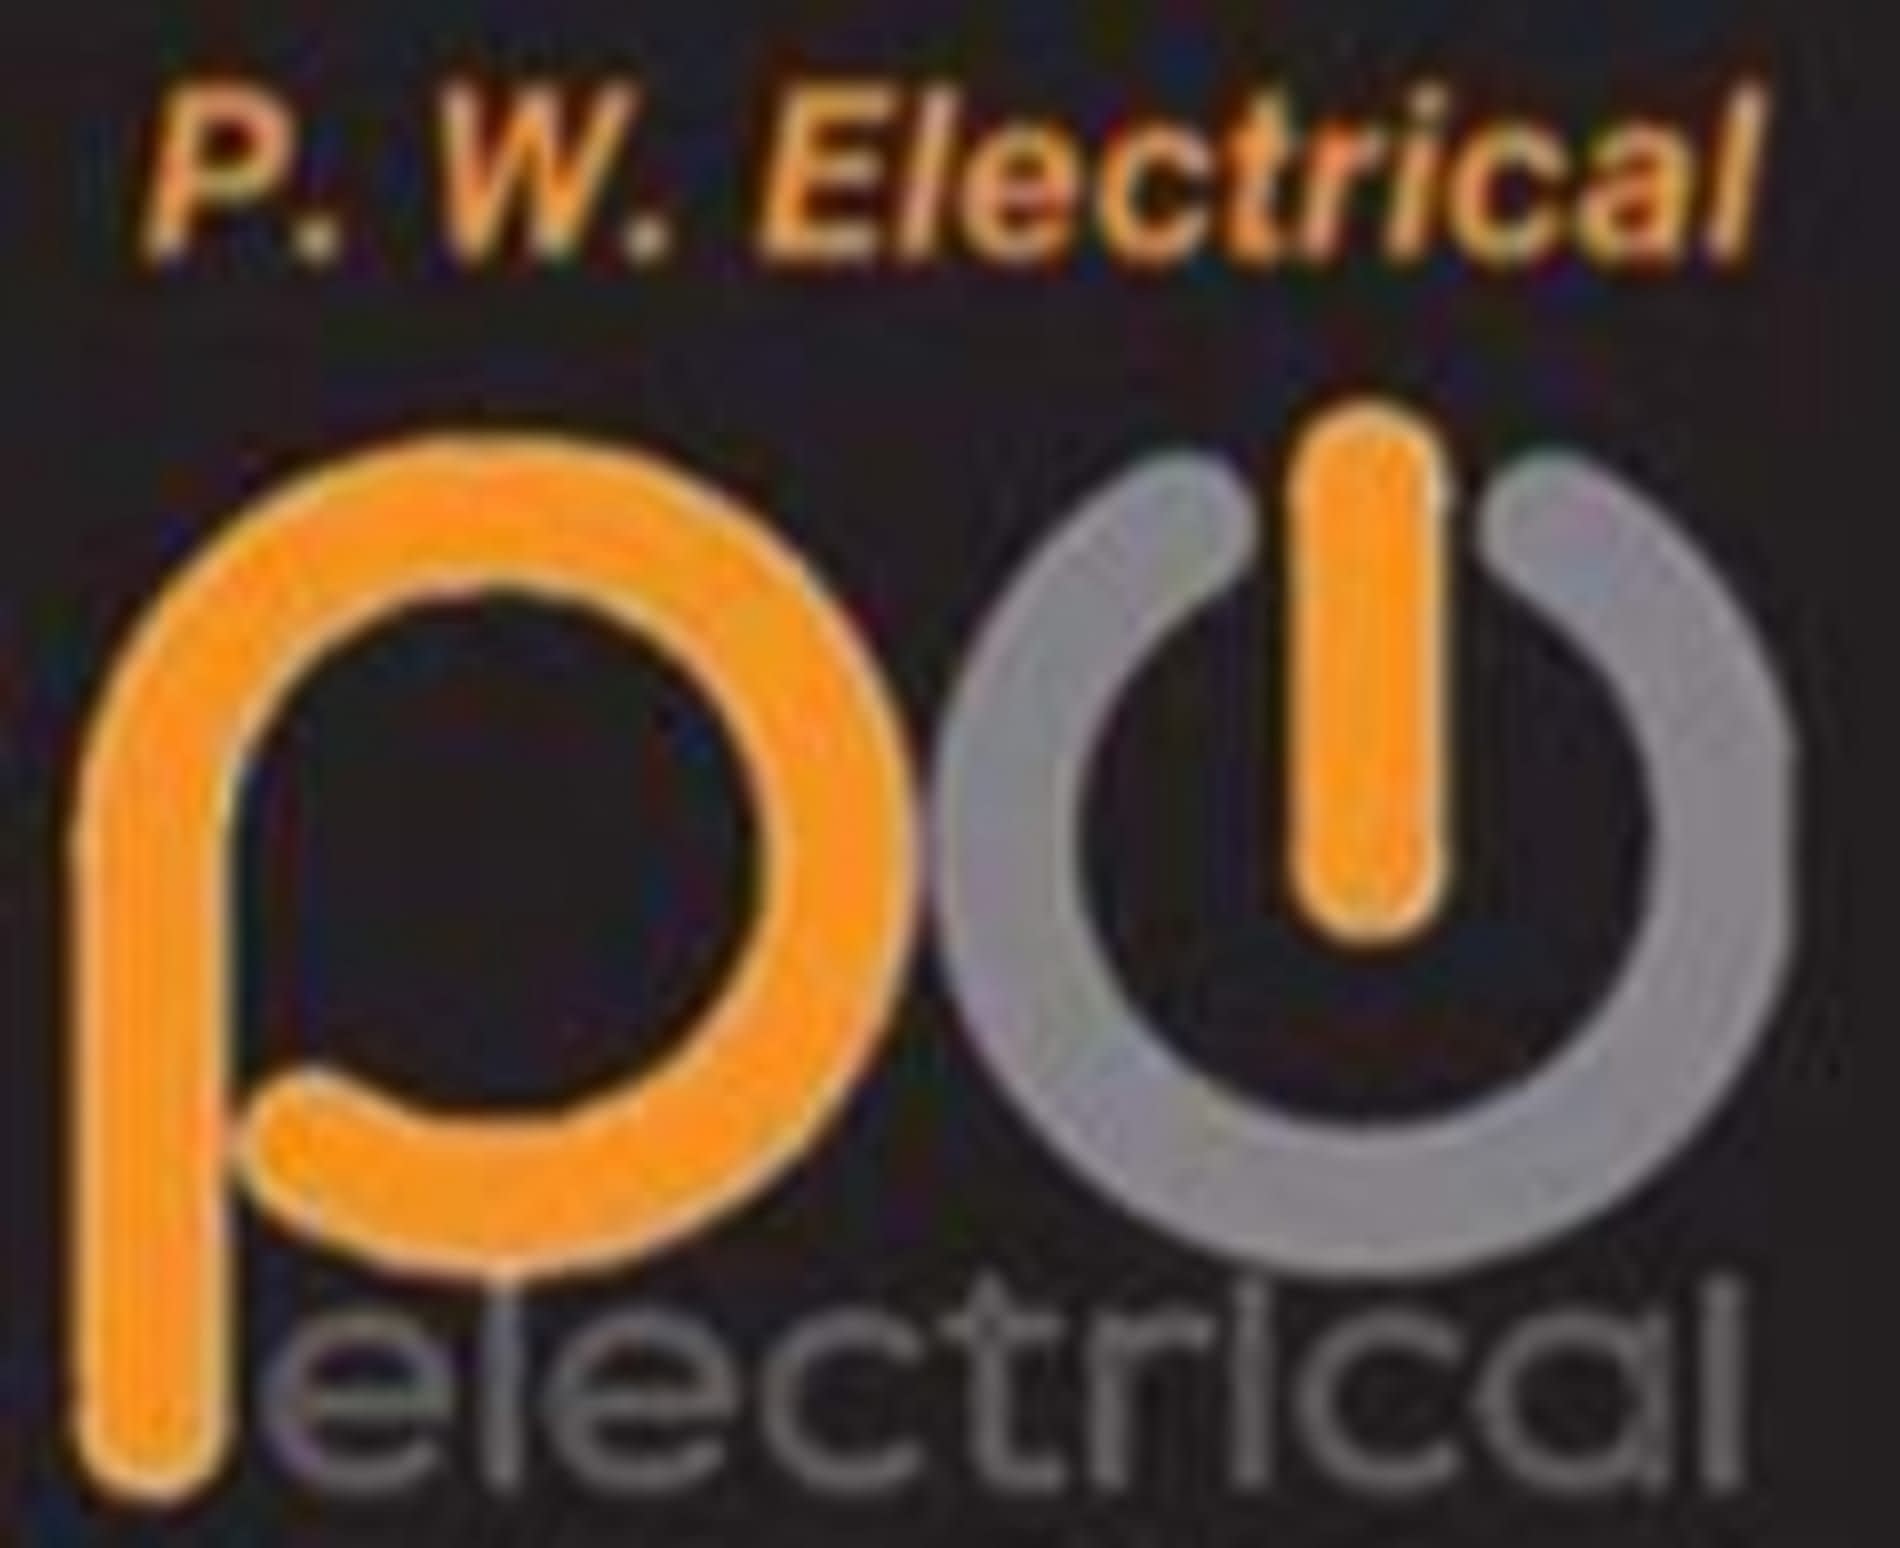 P. W. Electrical